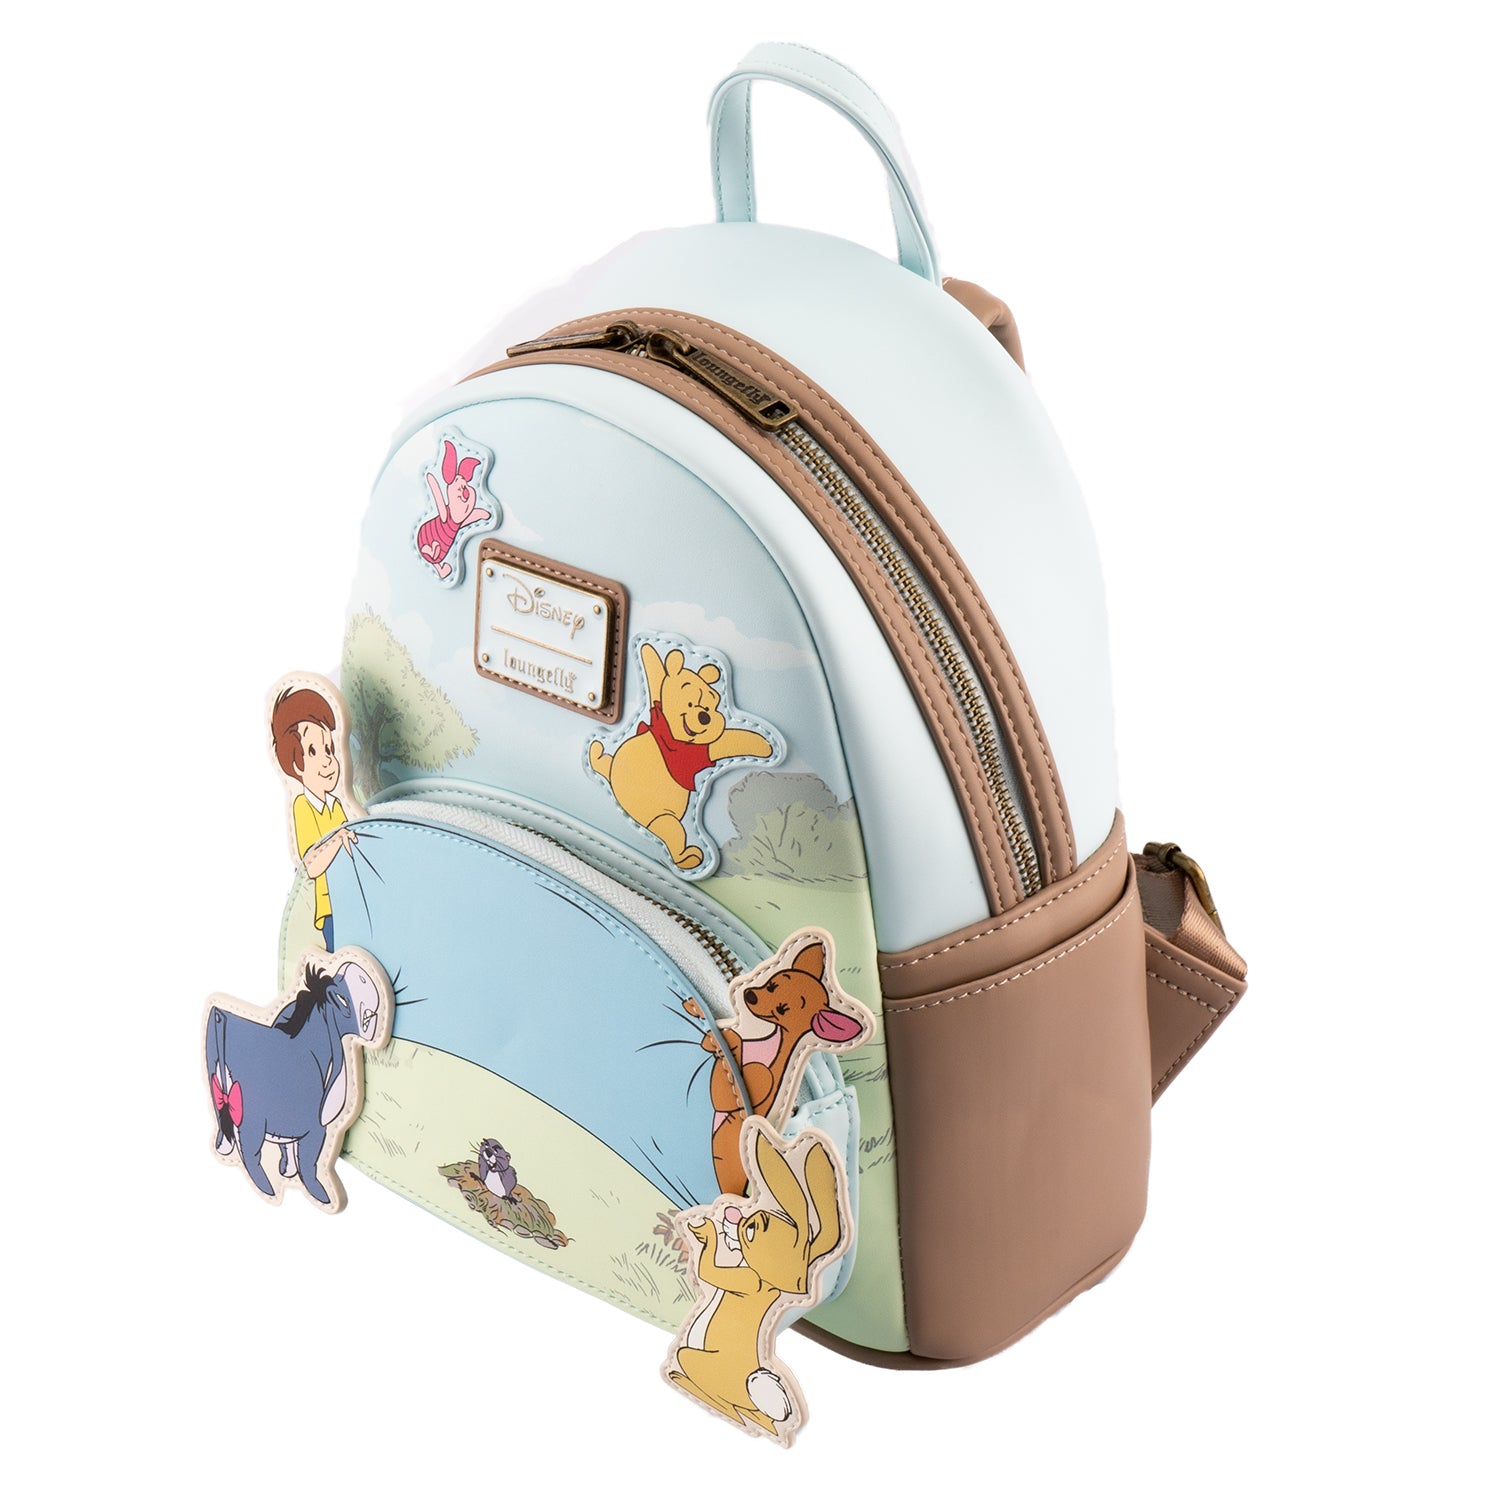 Disney | Winnie The Pooh 95th Anniversary Celebration Toss Mini Backpack